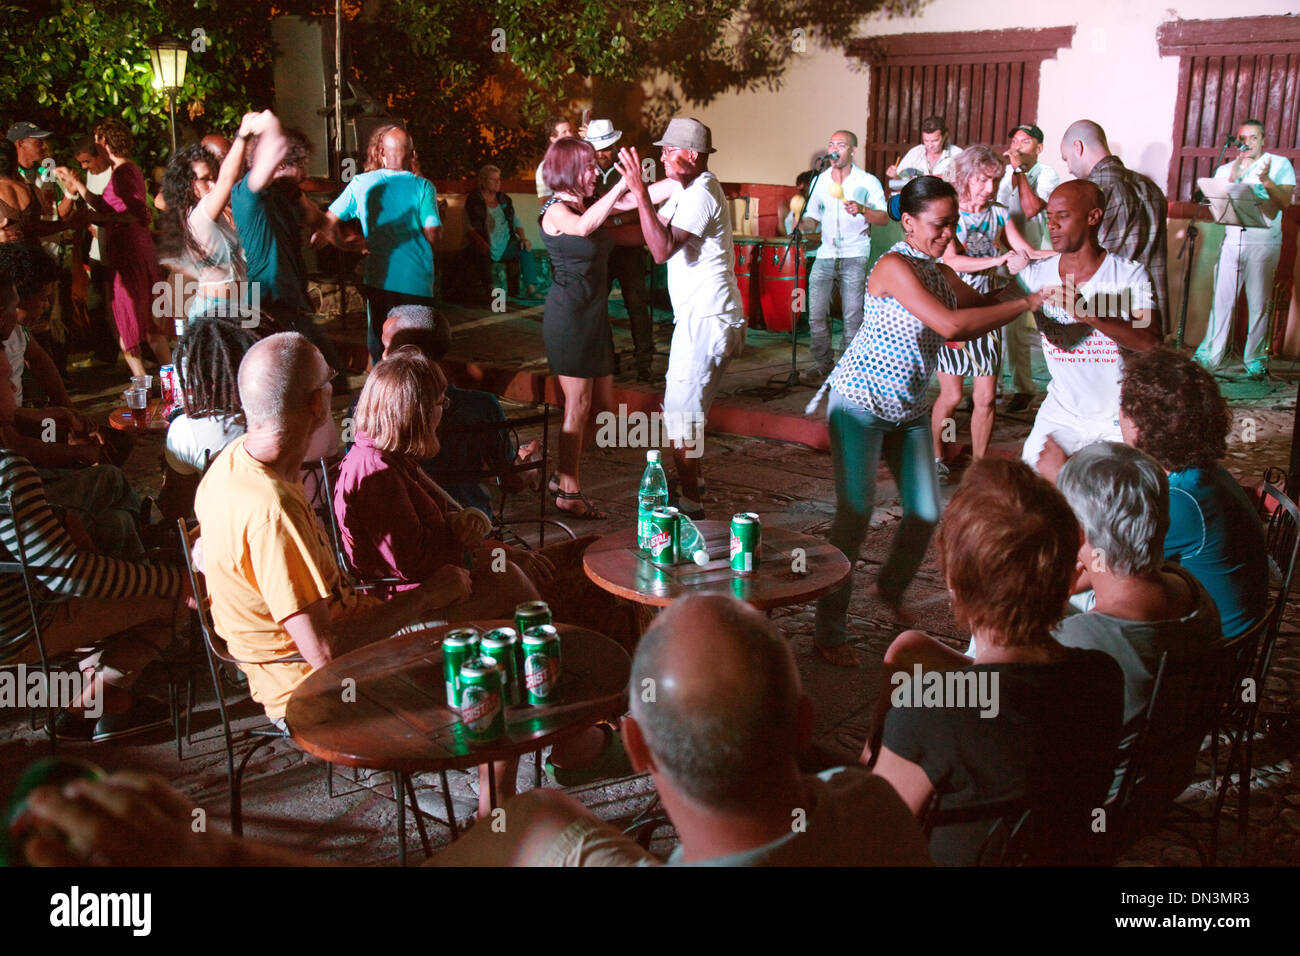 People dancing salsa outdoors in a bar late at night, Trinidad, Cuba, Caribbean, Latin America Stock Photo